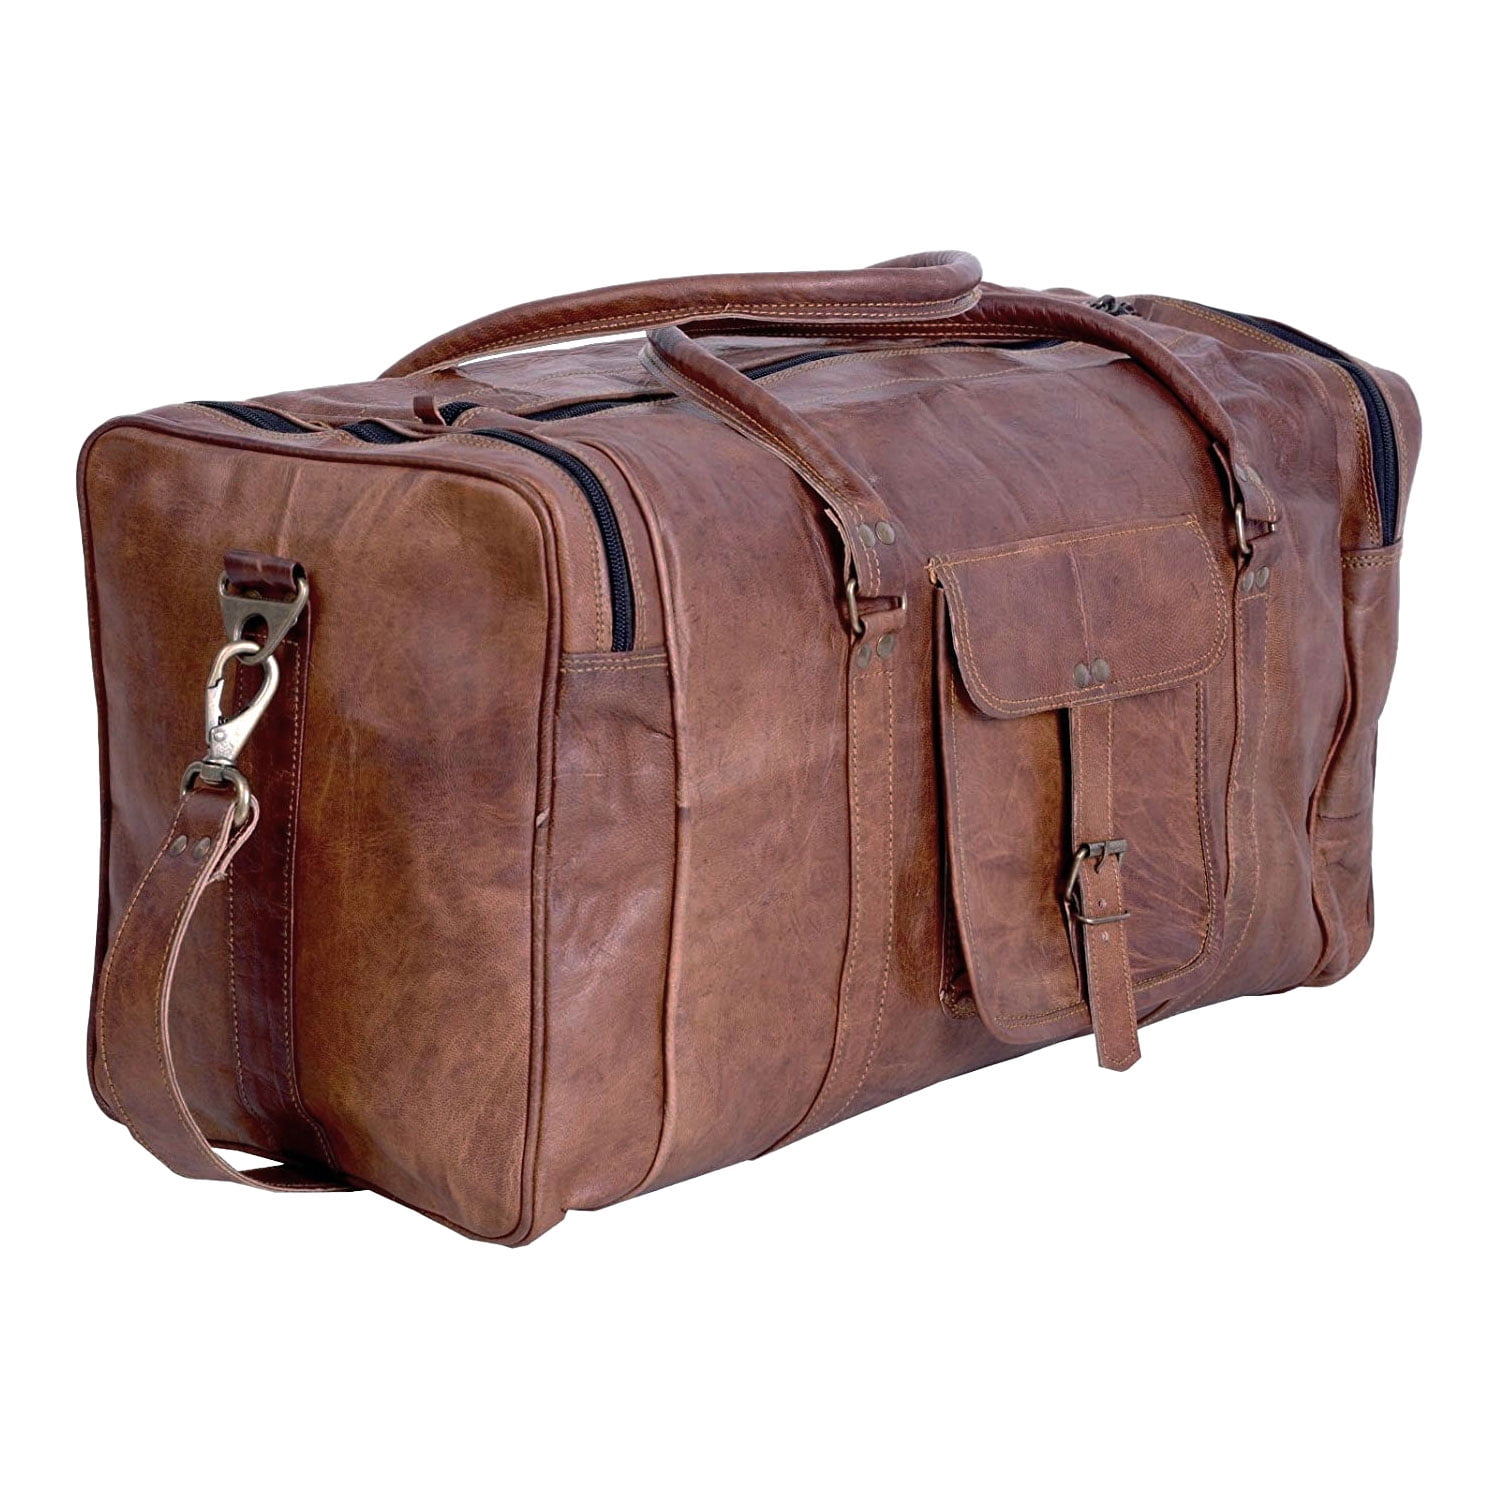 Vintage Brown Leather Bag duffel Travel Men Retro Gym Luggage Overnight Duffle 